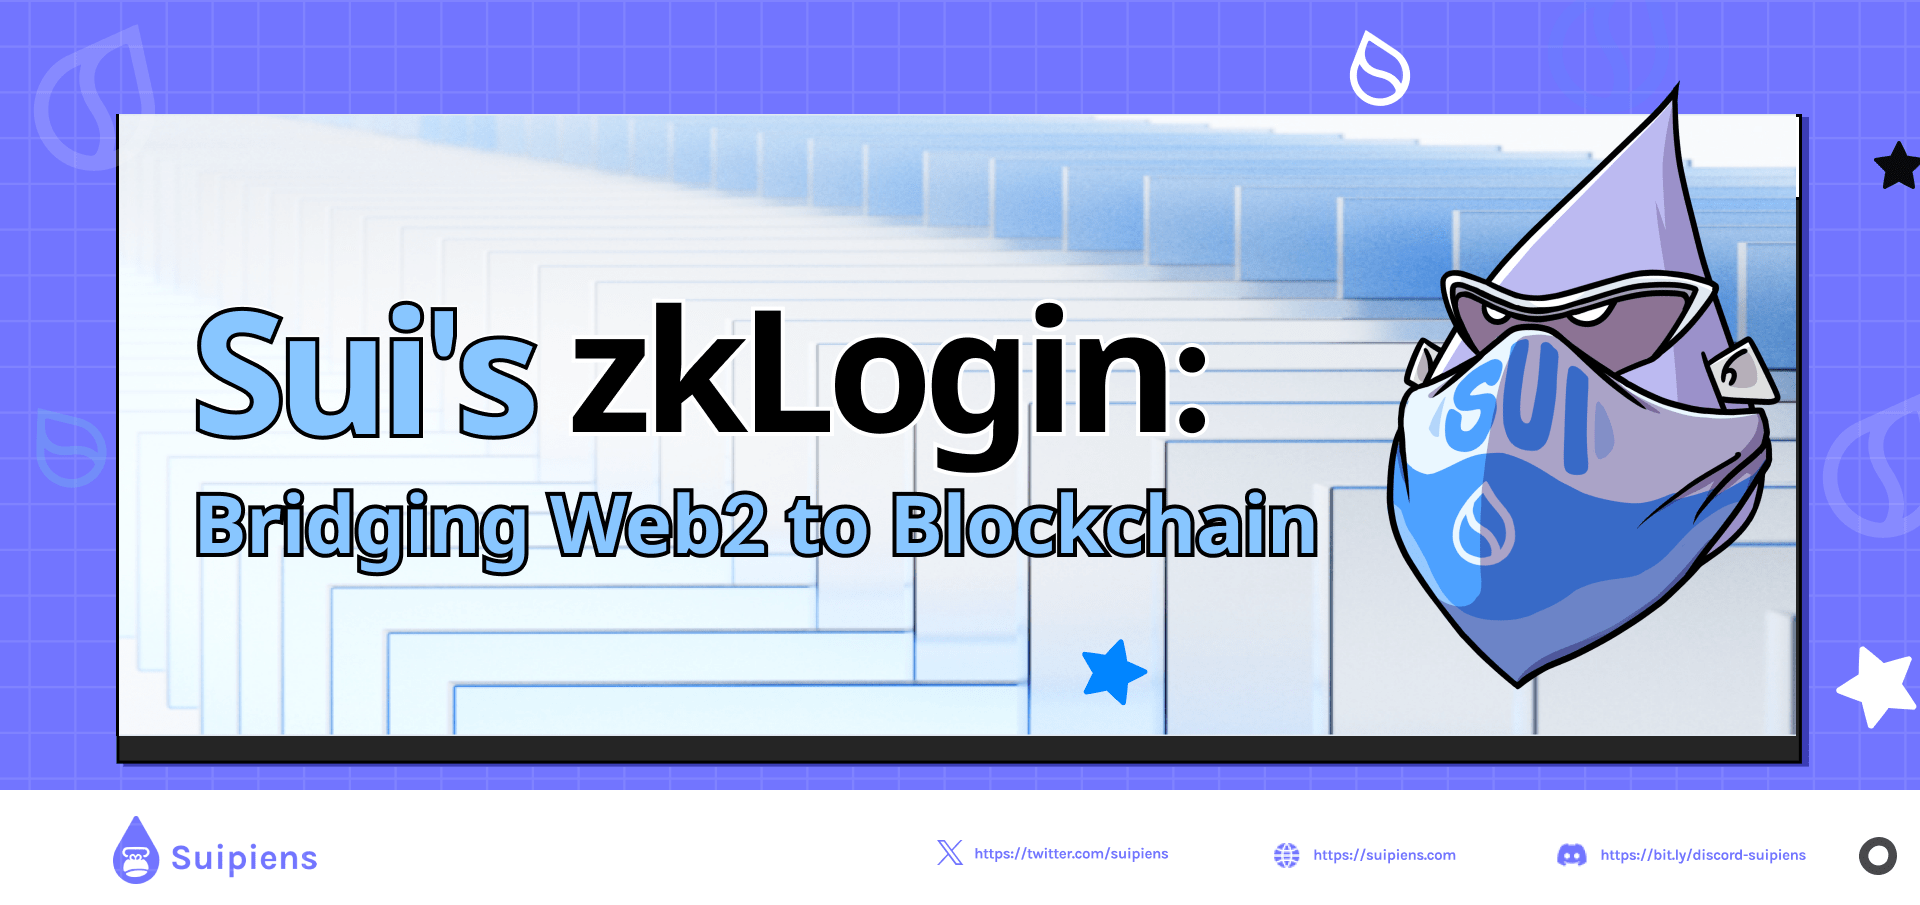 Sui's zkLogin: Bridging Web2 to Blockchain